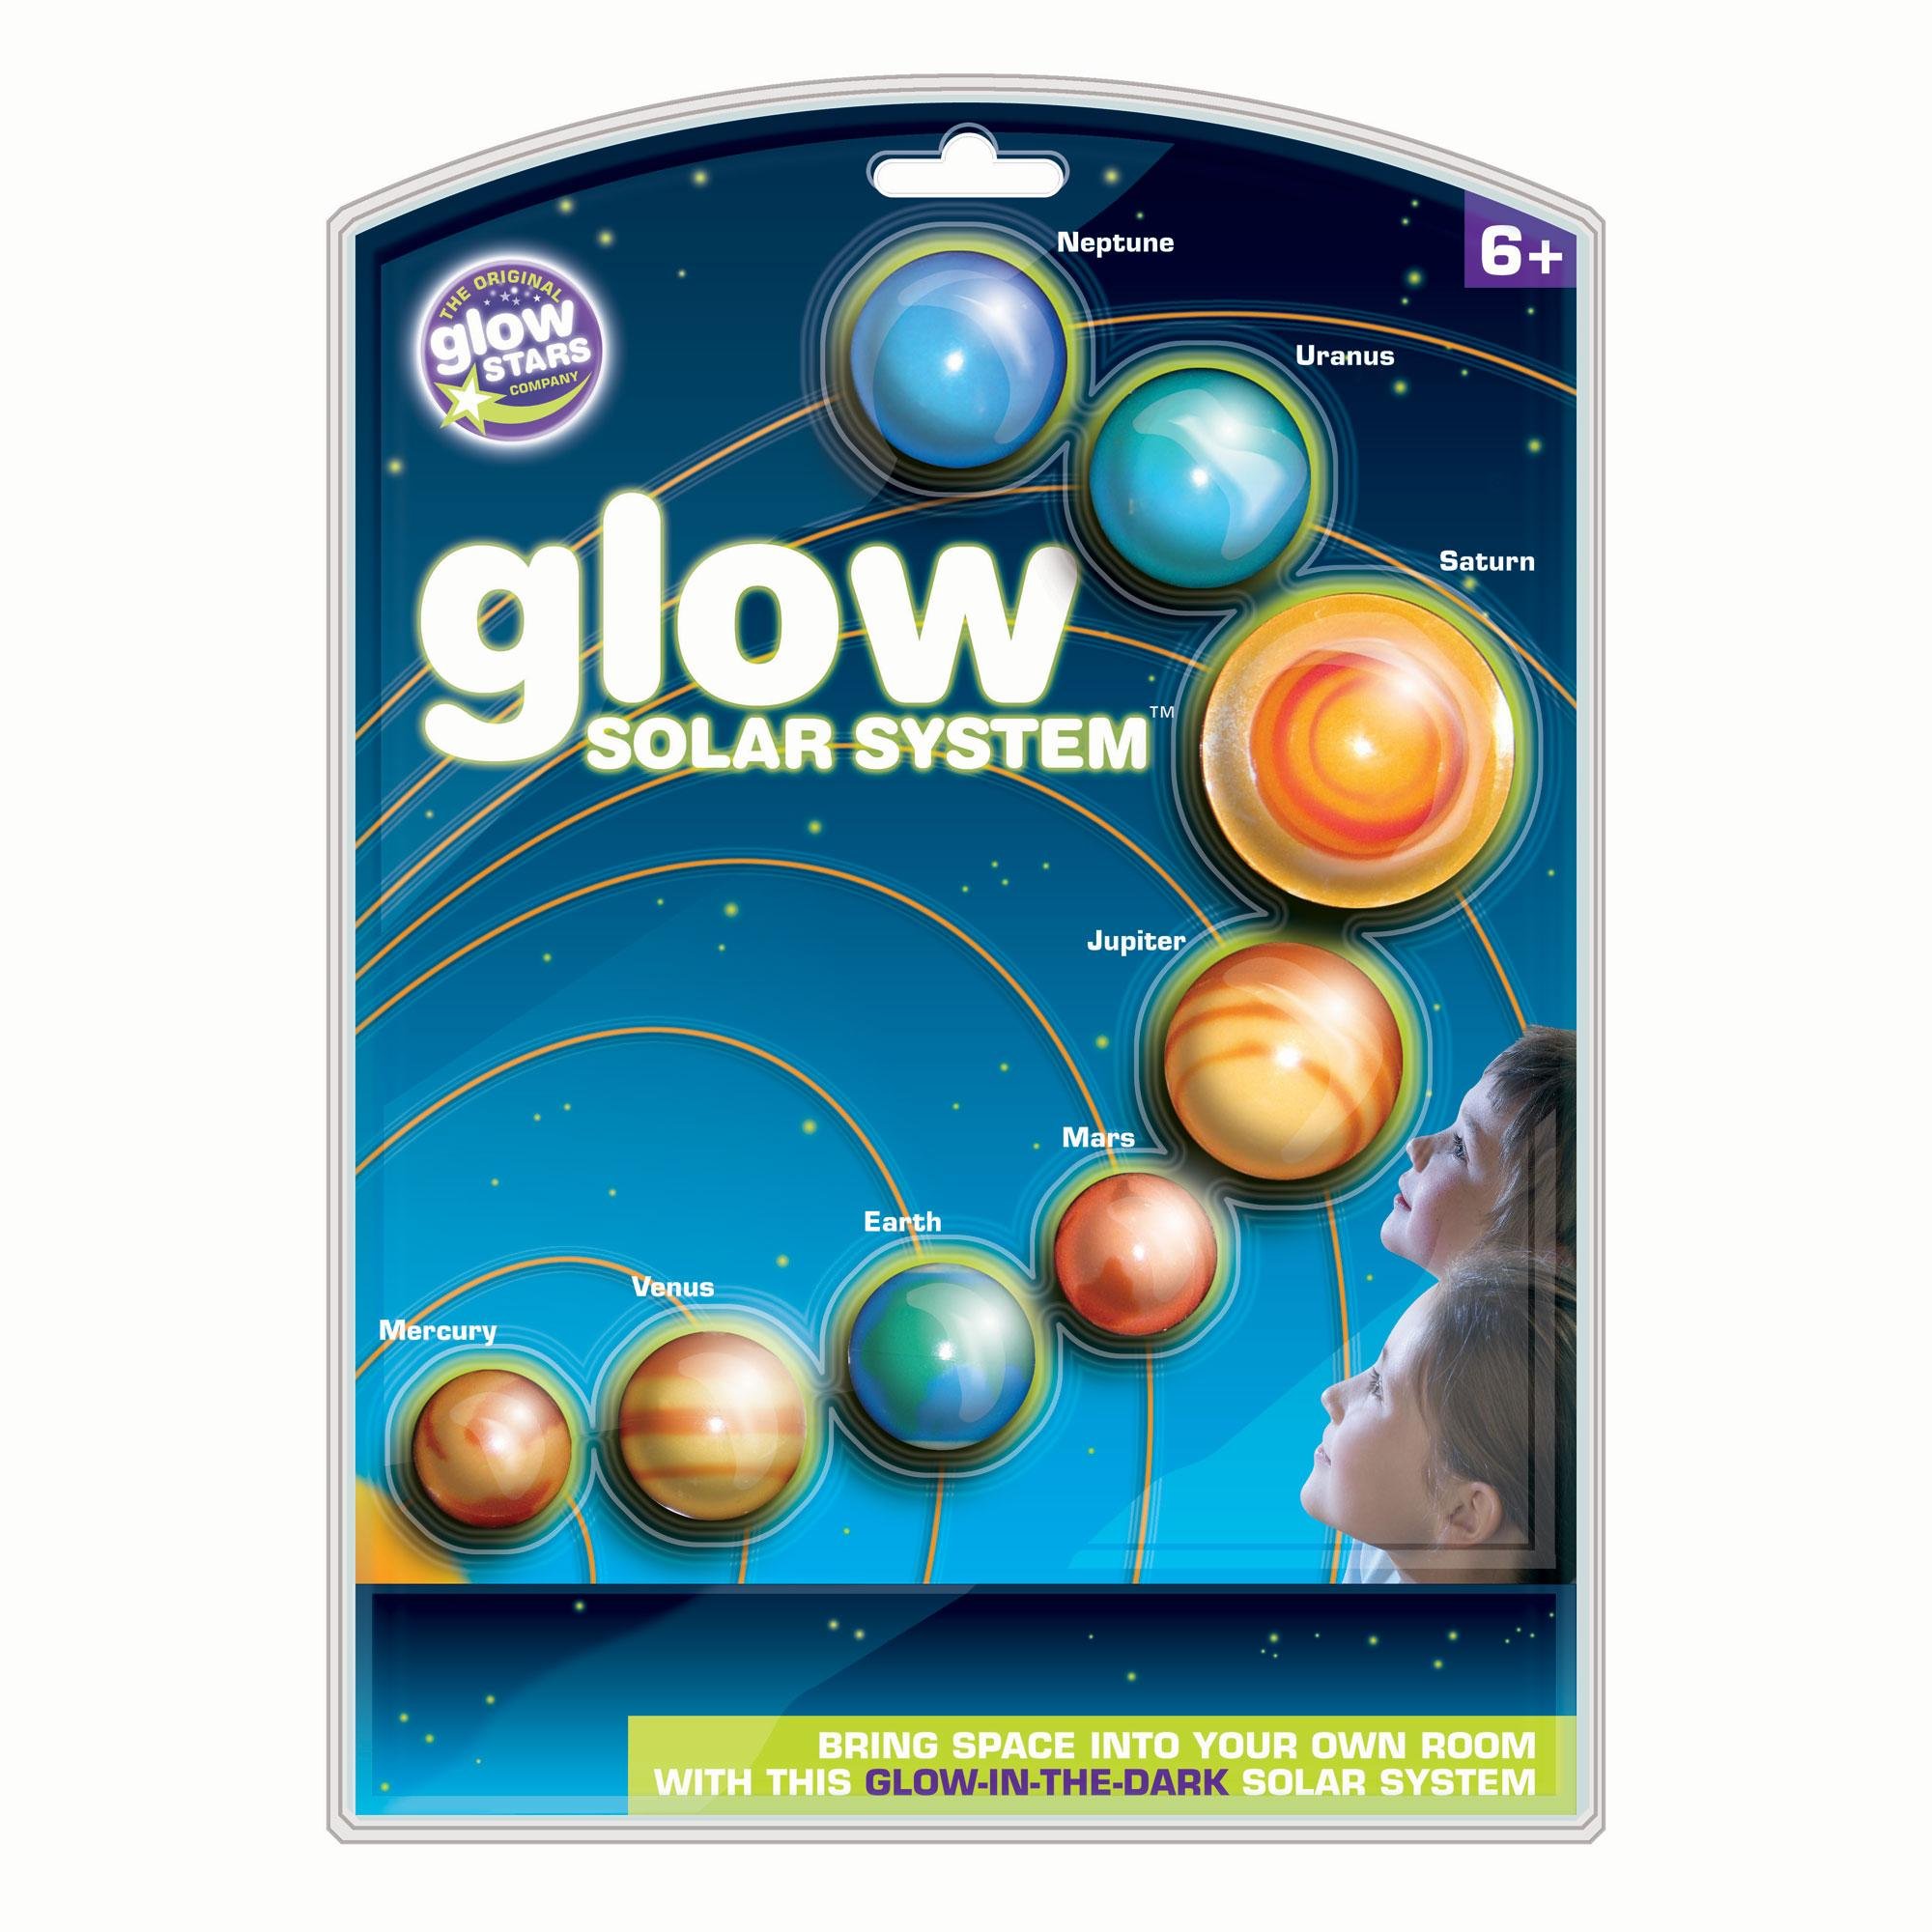 Glow Solar System Kit